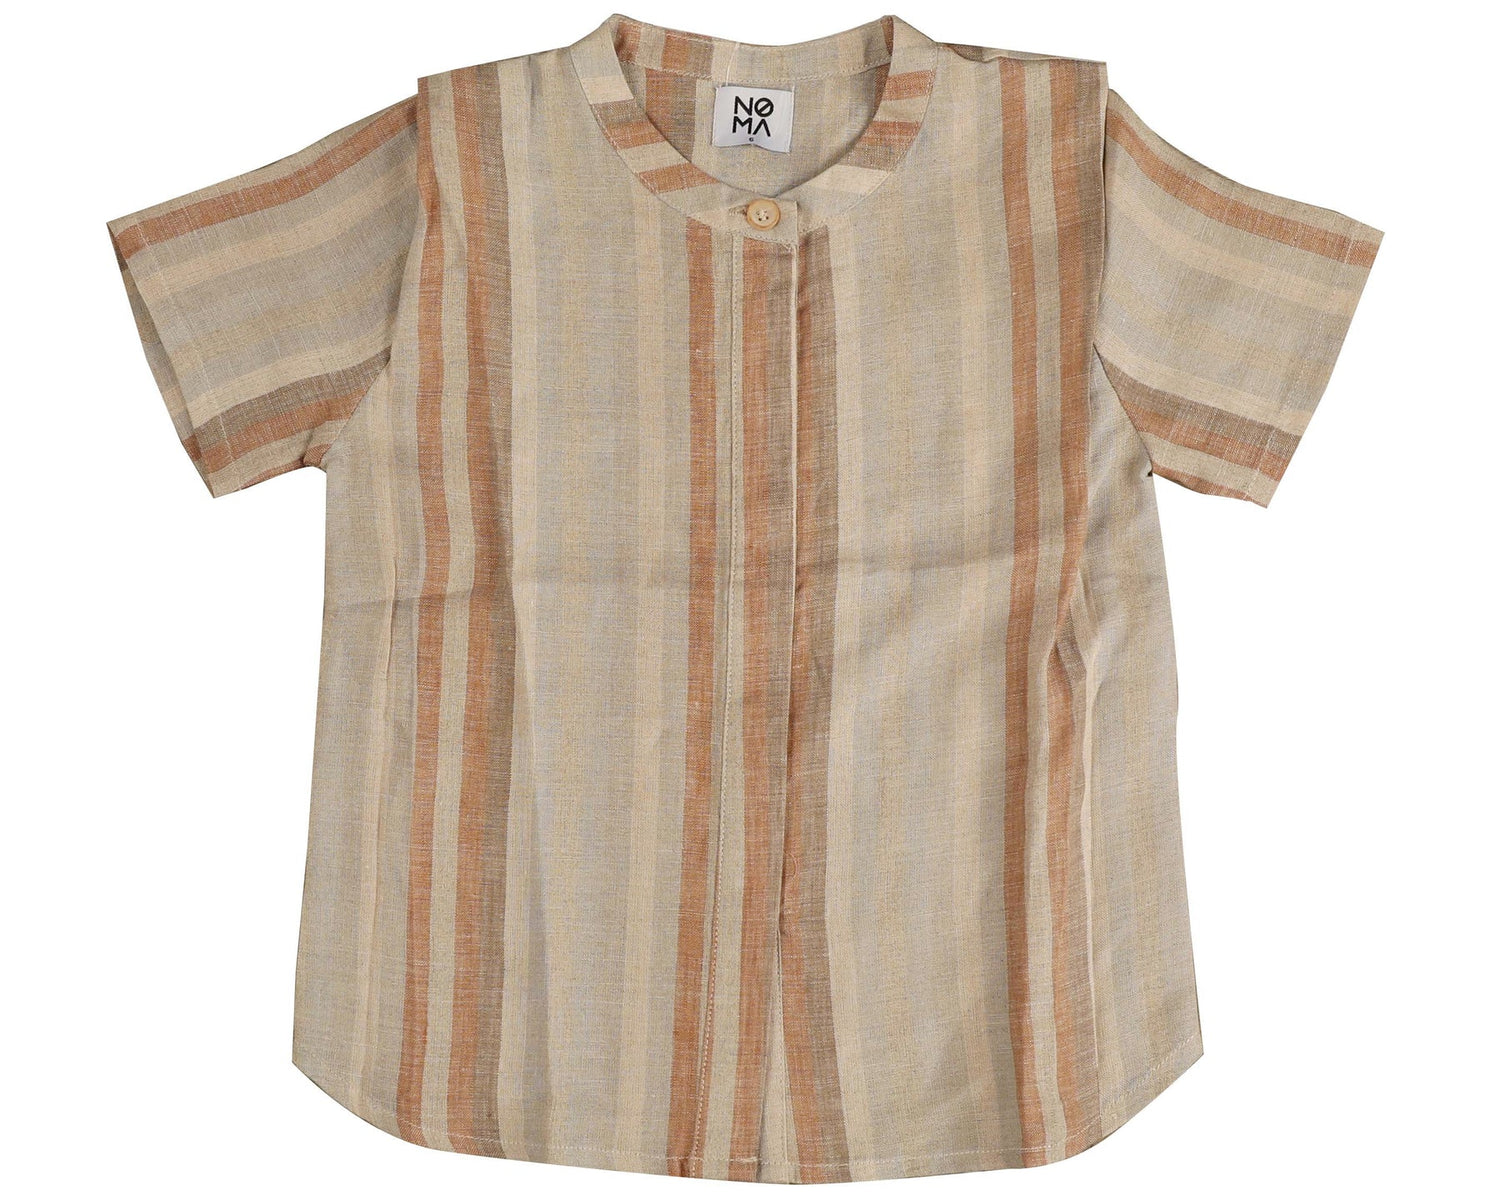 Noma Apricot Wide Striped Shirt